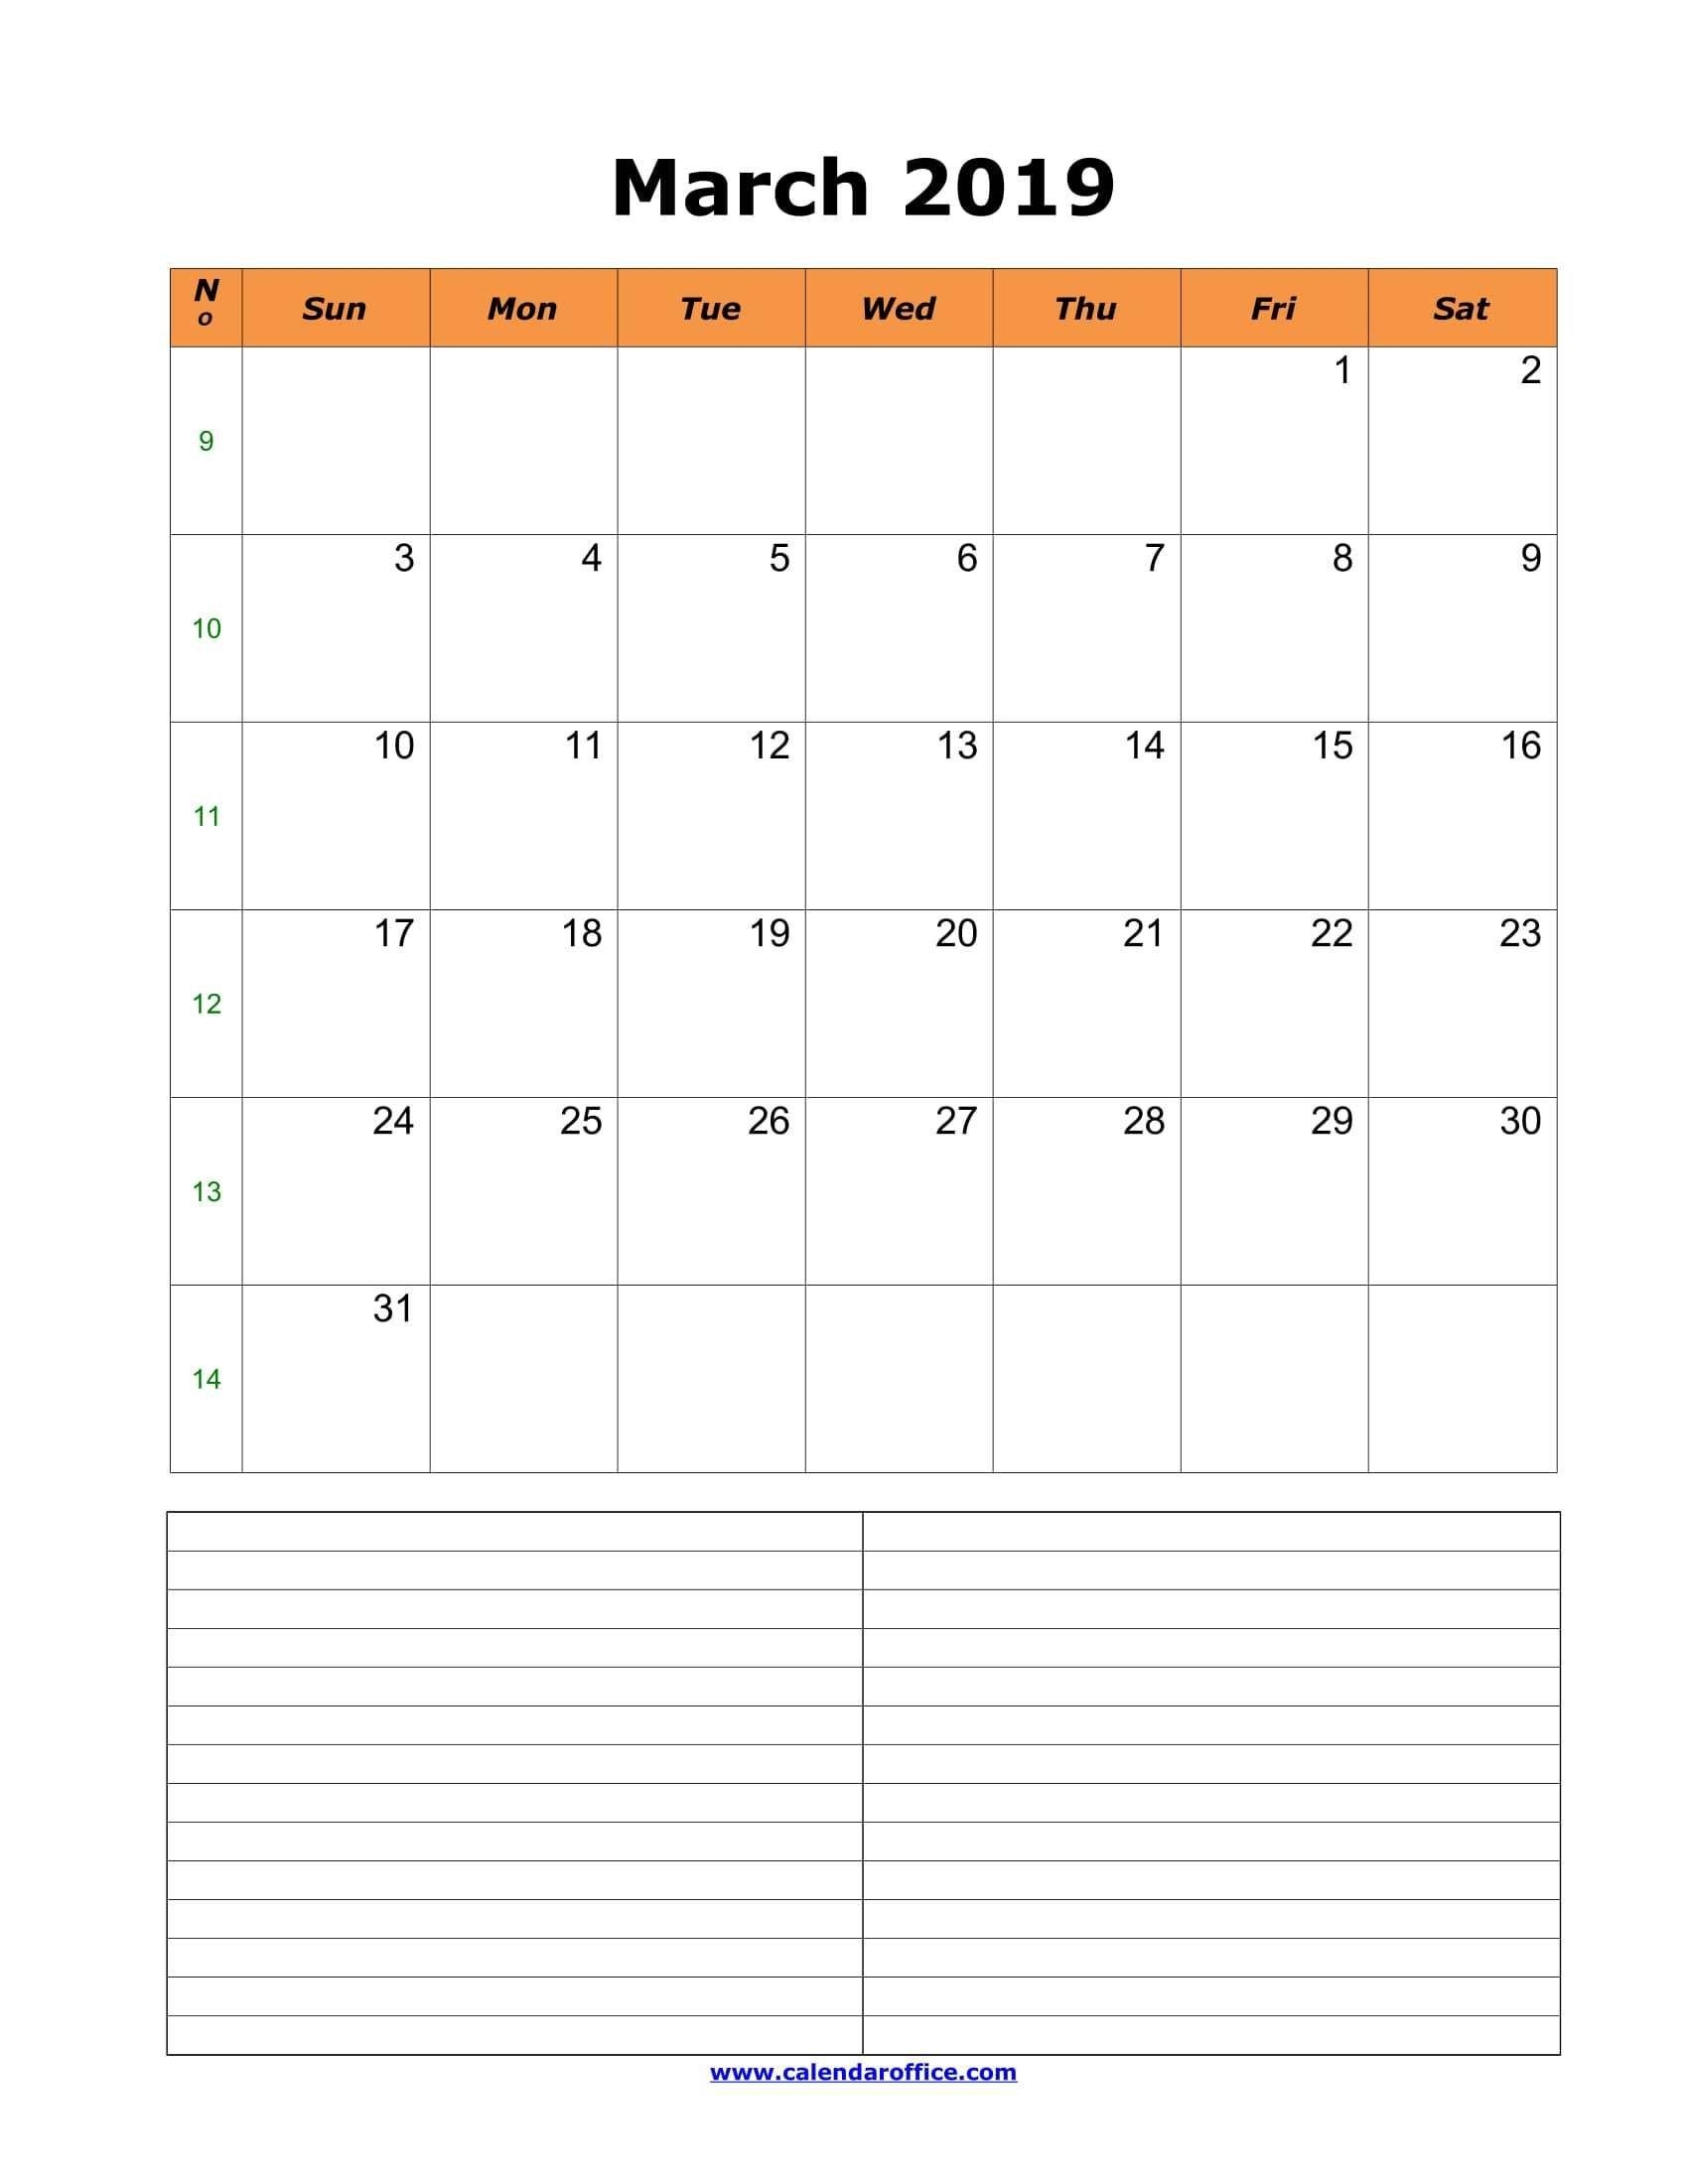 March 2019 Calendar A4 Size | Printable Monthly Calendar-8.5 By 11 Blank Calendar Month